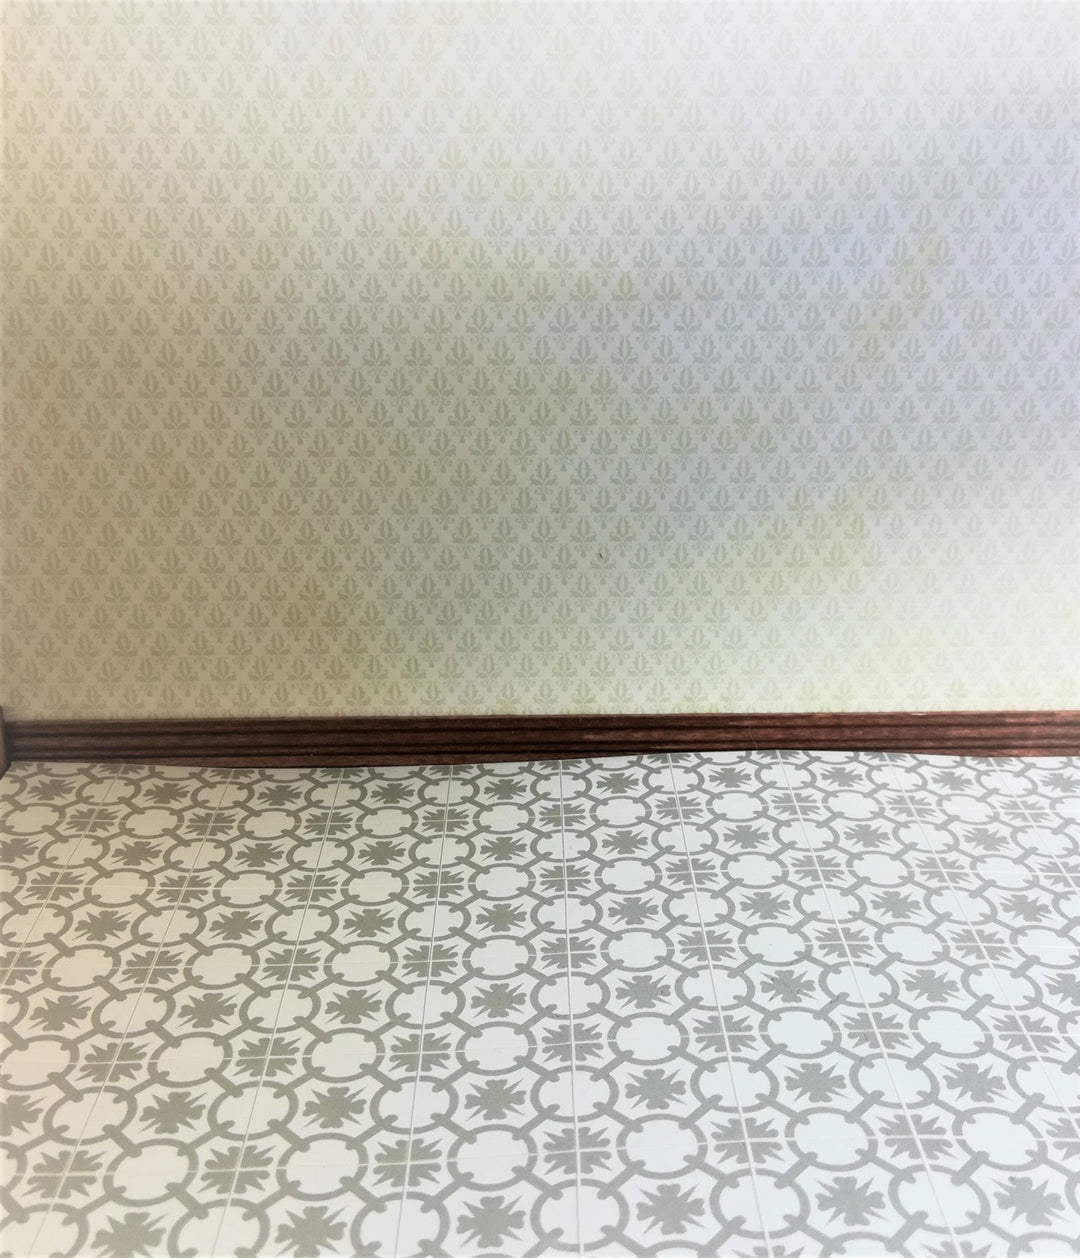 Dollhouse Miniature Tile Flooring Sheet Gray & White 1:12 Scale Break Off Pieces - Miniature Crush